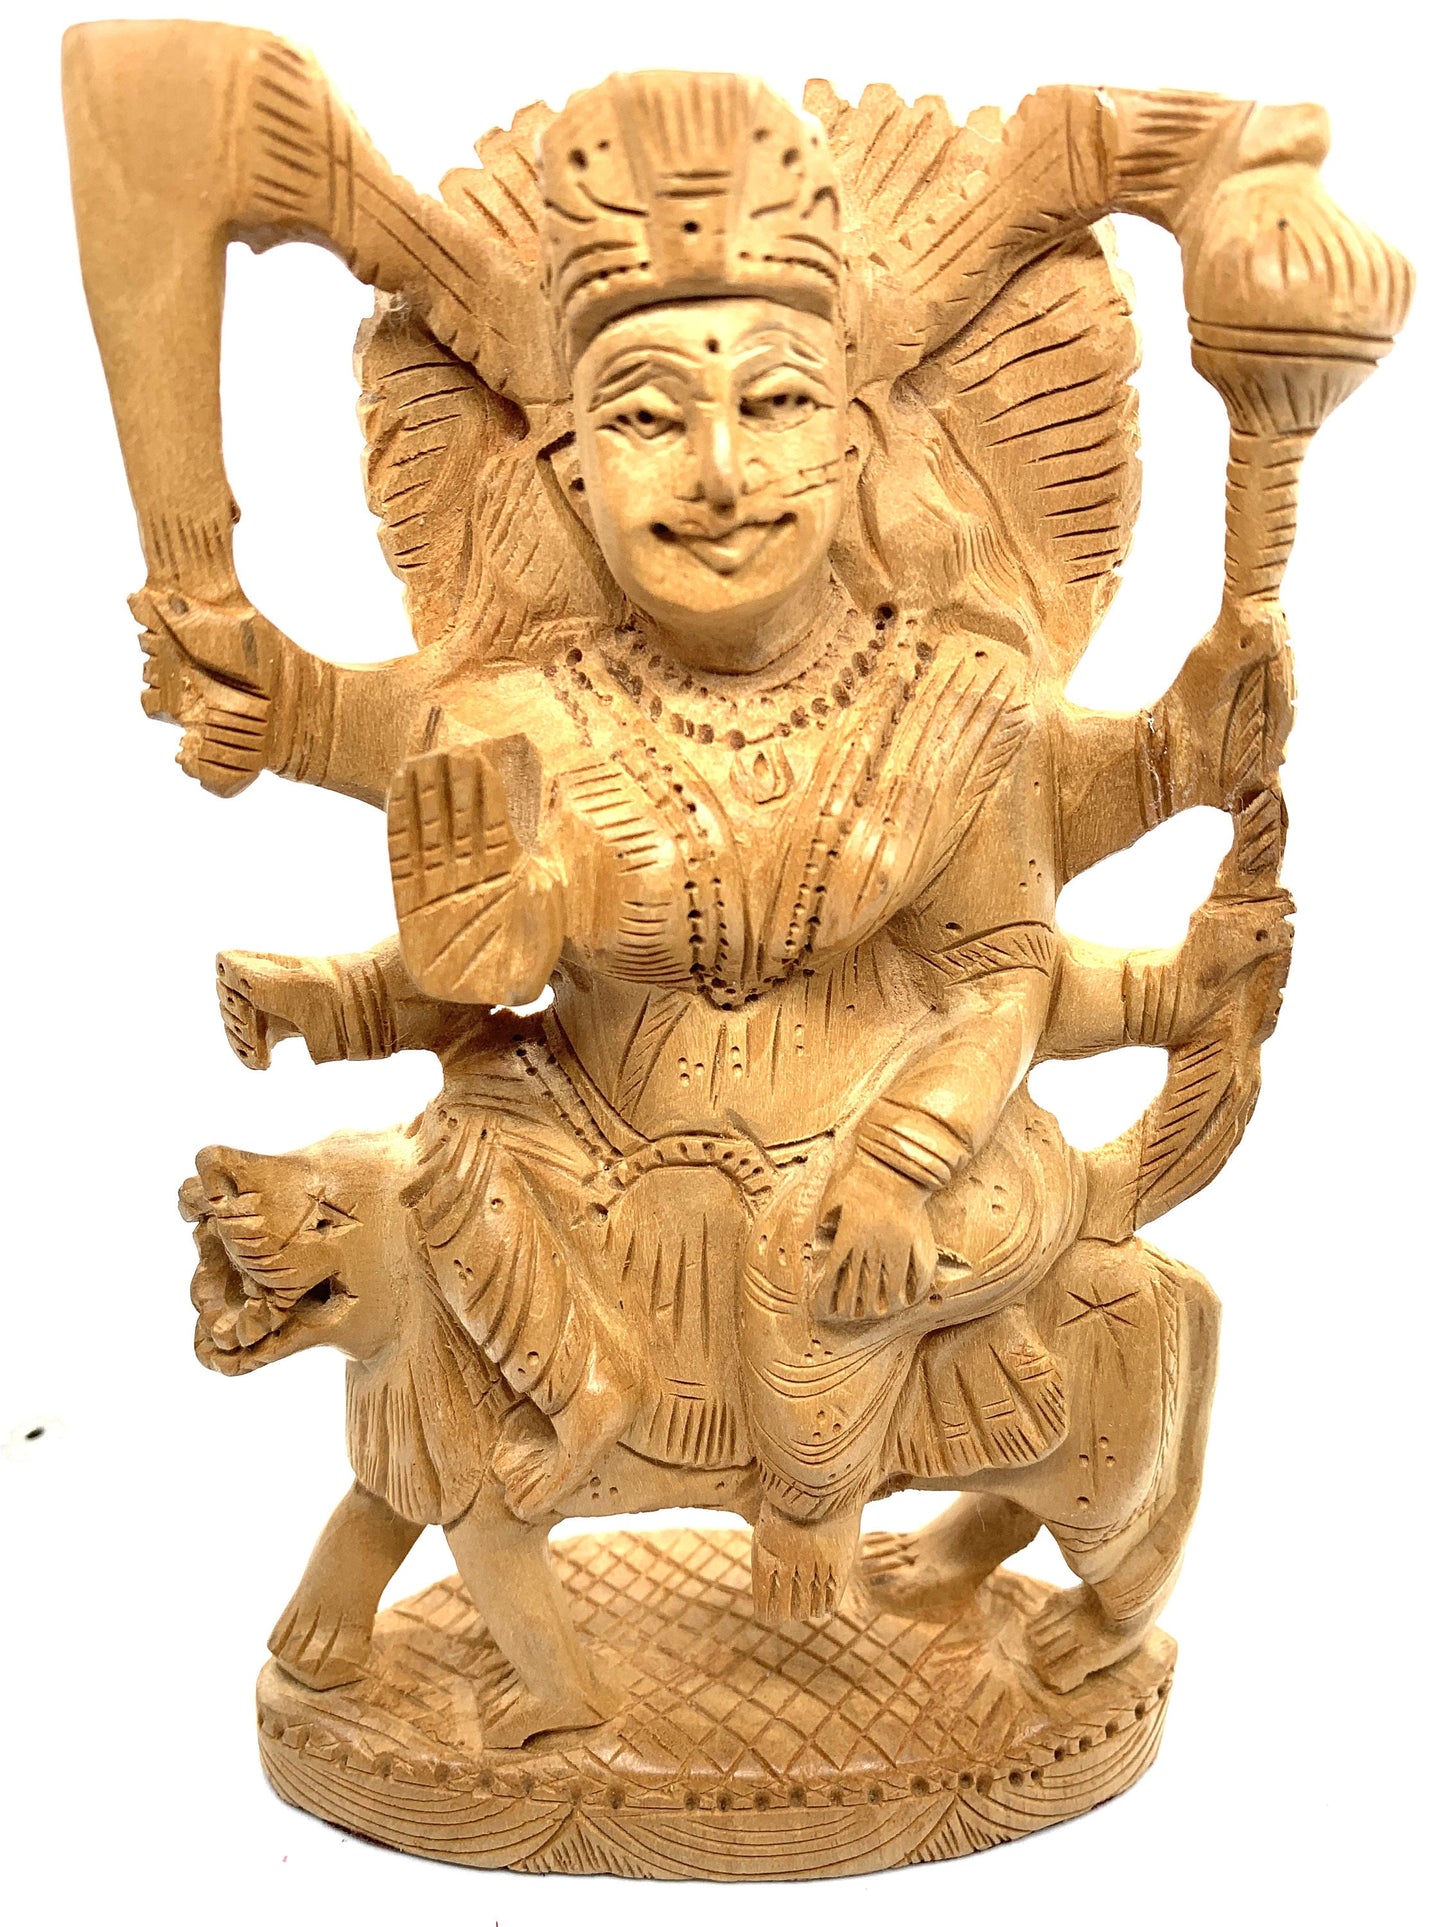 Durga Statue 6" Wood India Statue, Hindu Goddess Durga Figurine, Protection Goddess Kali Sculpture, Wooden God Figure Prayer Idol Home Decor